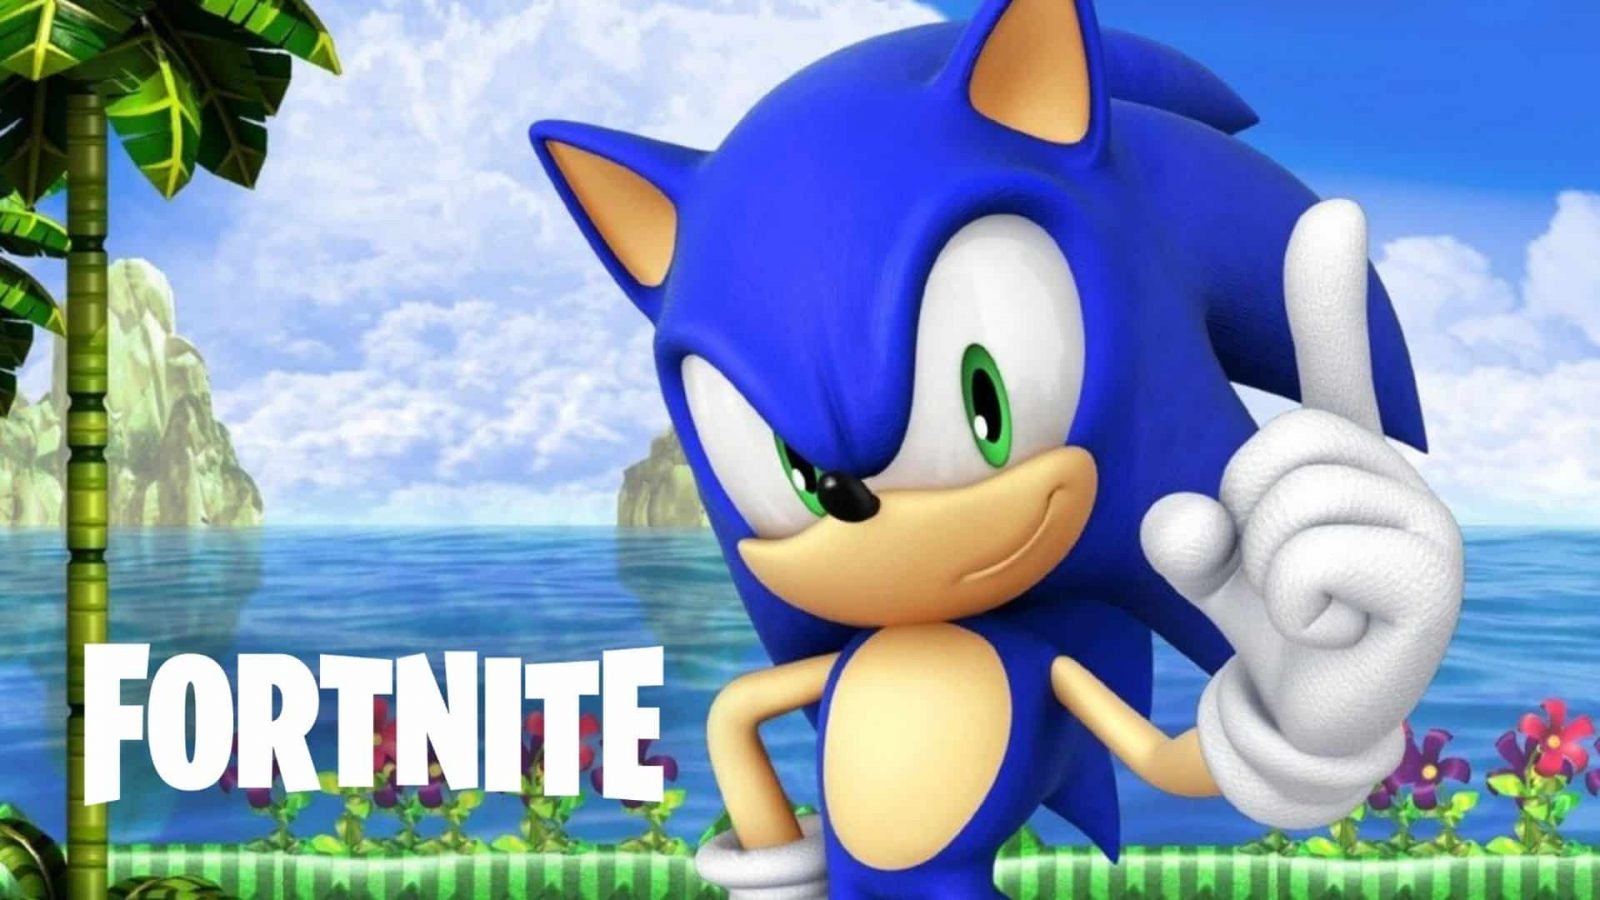 Sonic 3 reveals Shadow in “first peek” at movie sequel - Dexerto